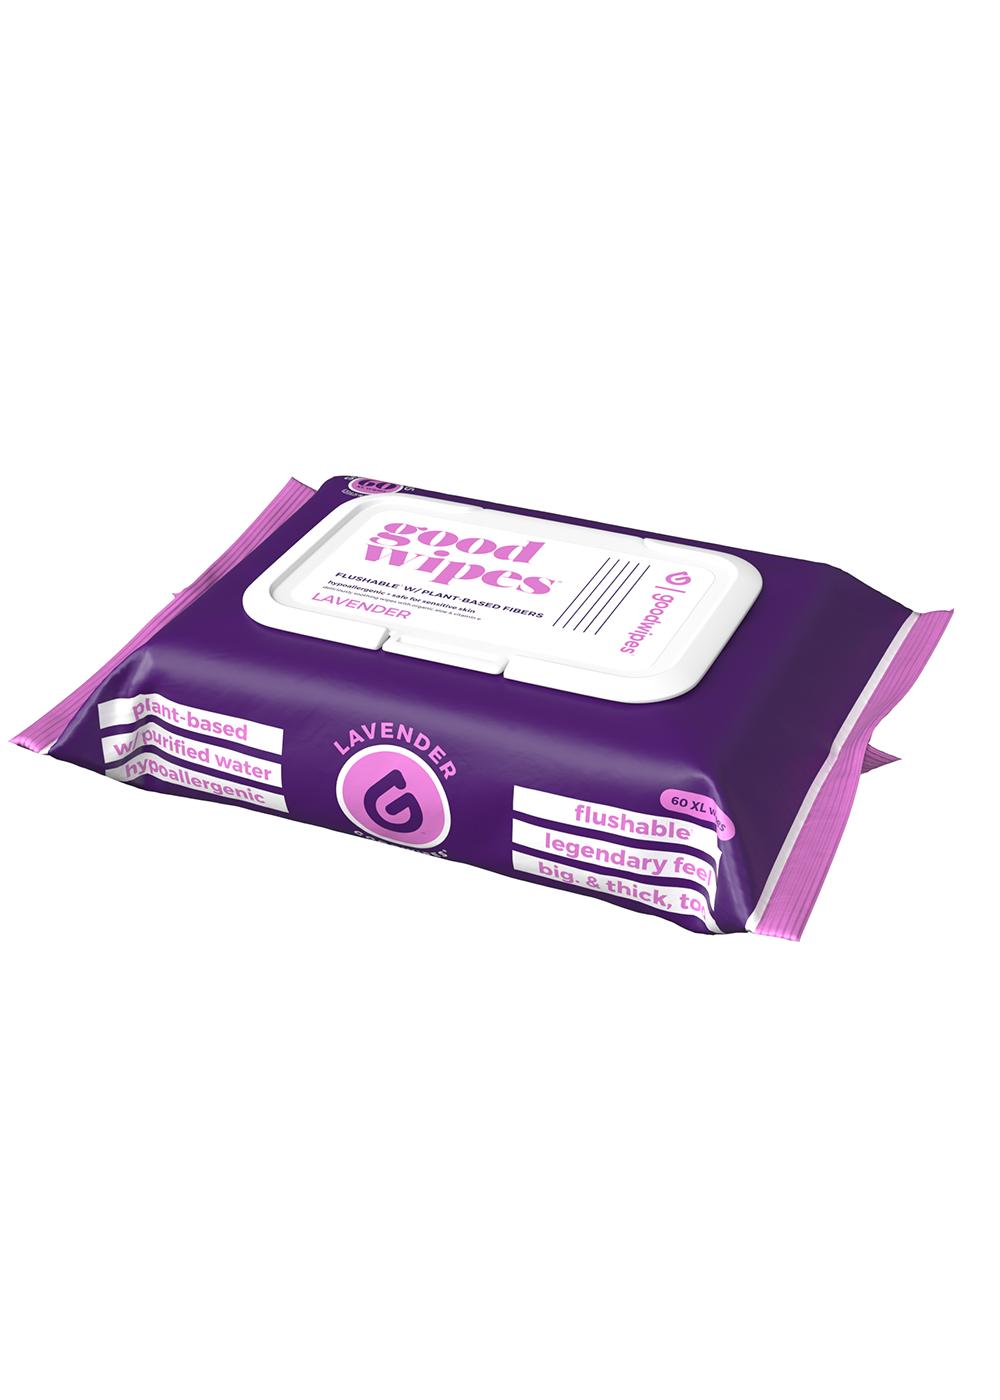 Goodwipes Flushable & Biodegradable Wipes - Lavender; image 4 of 4